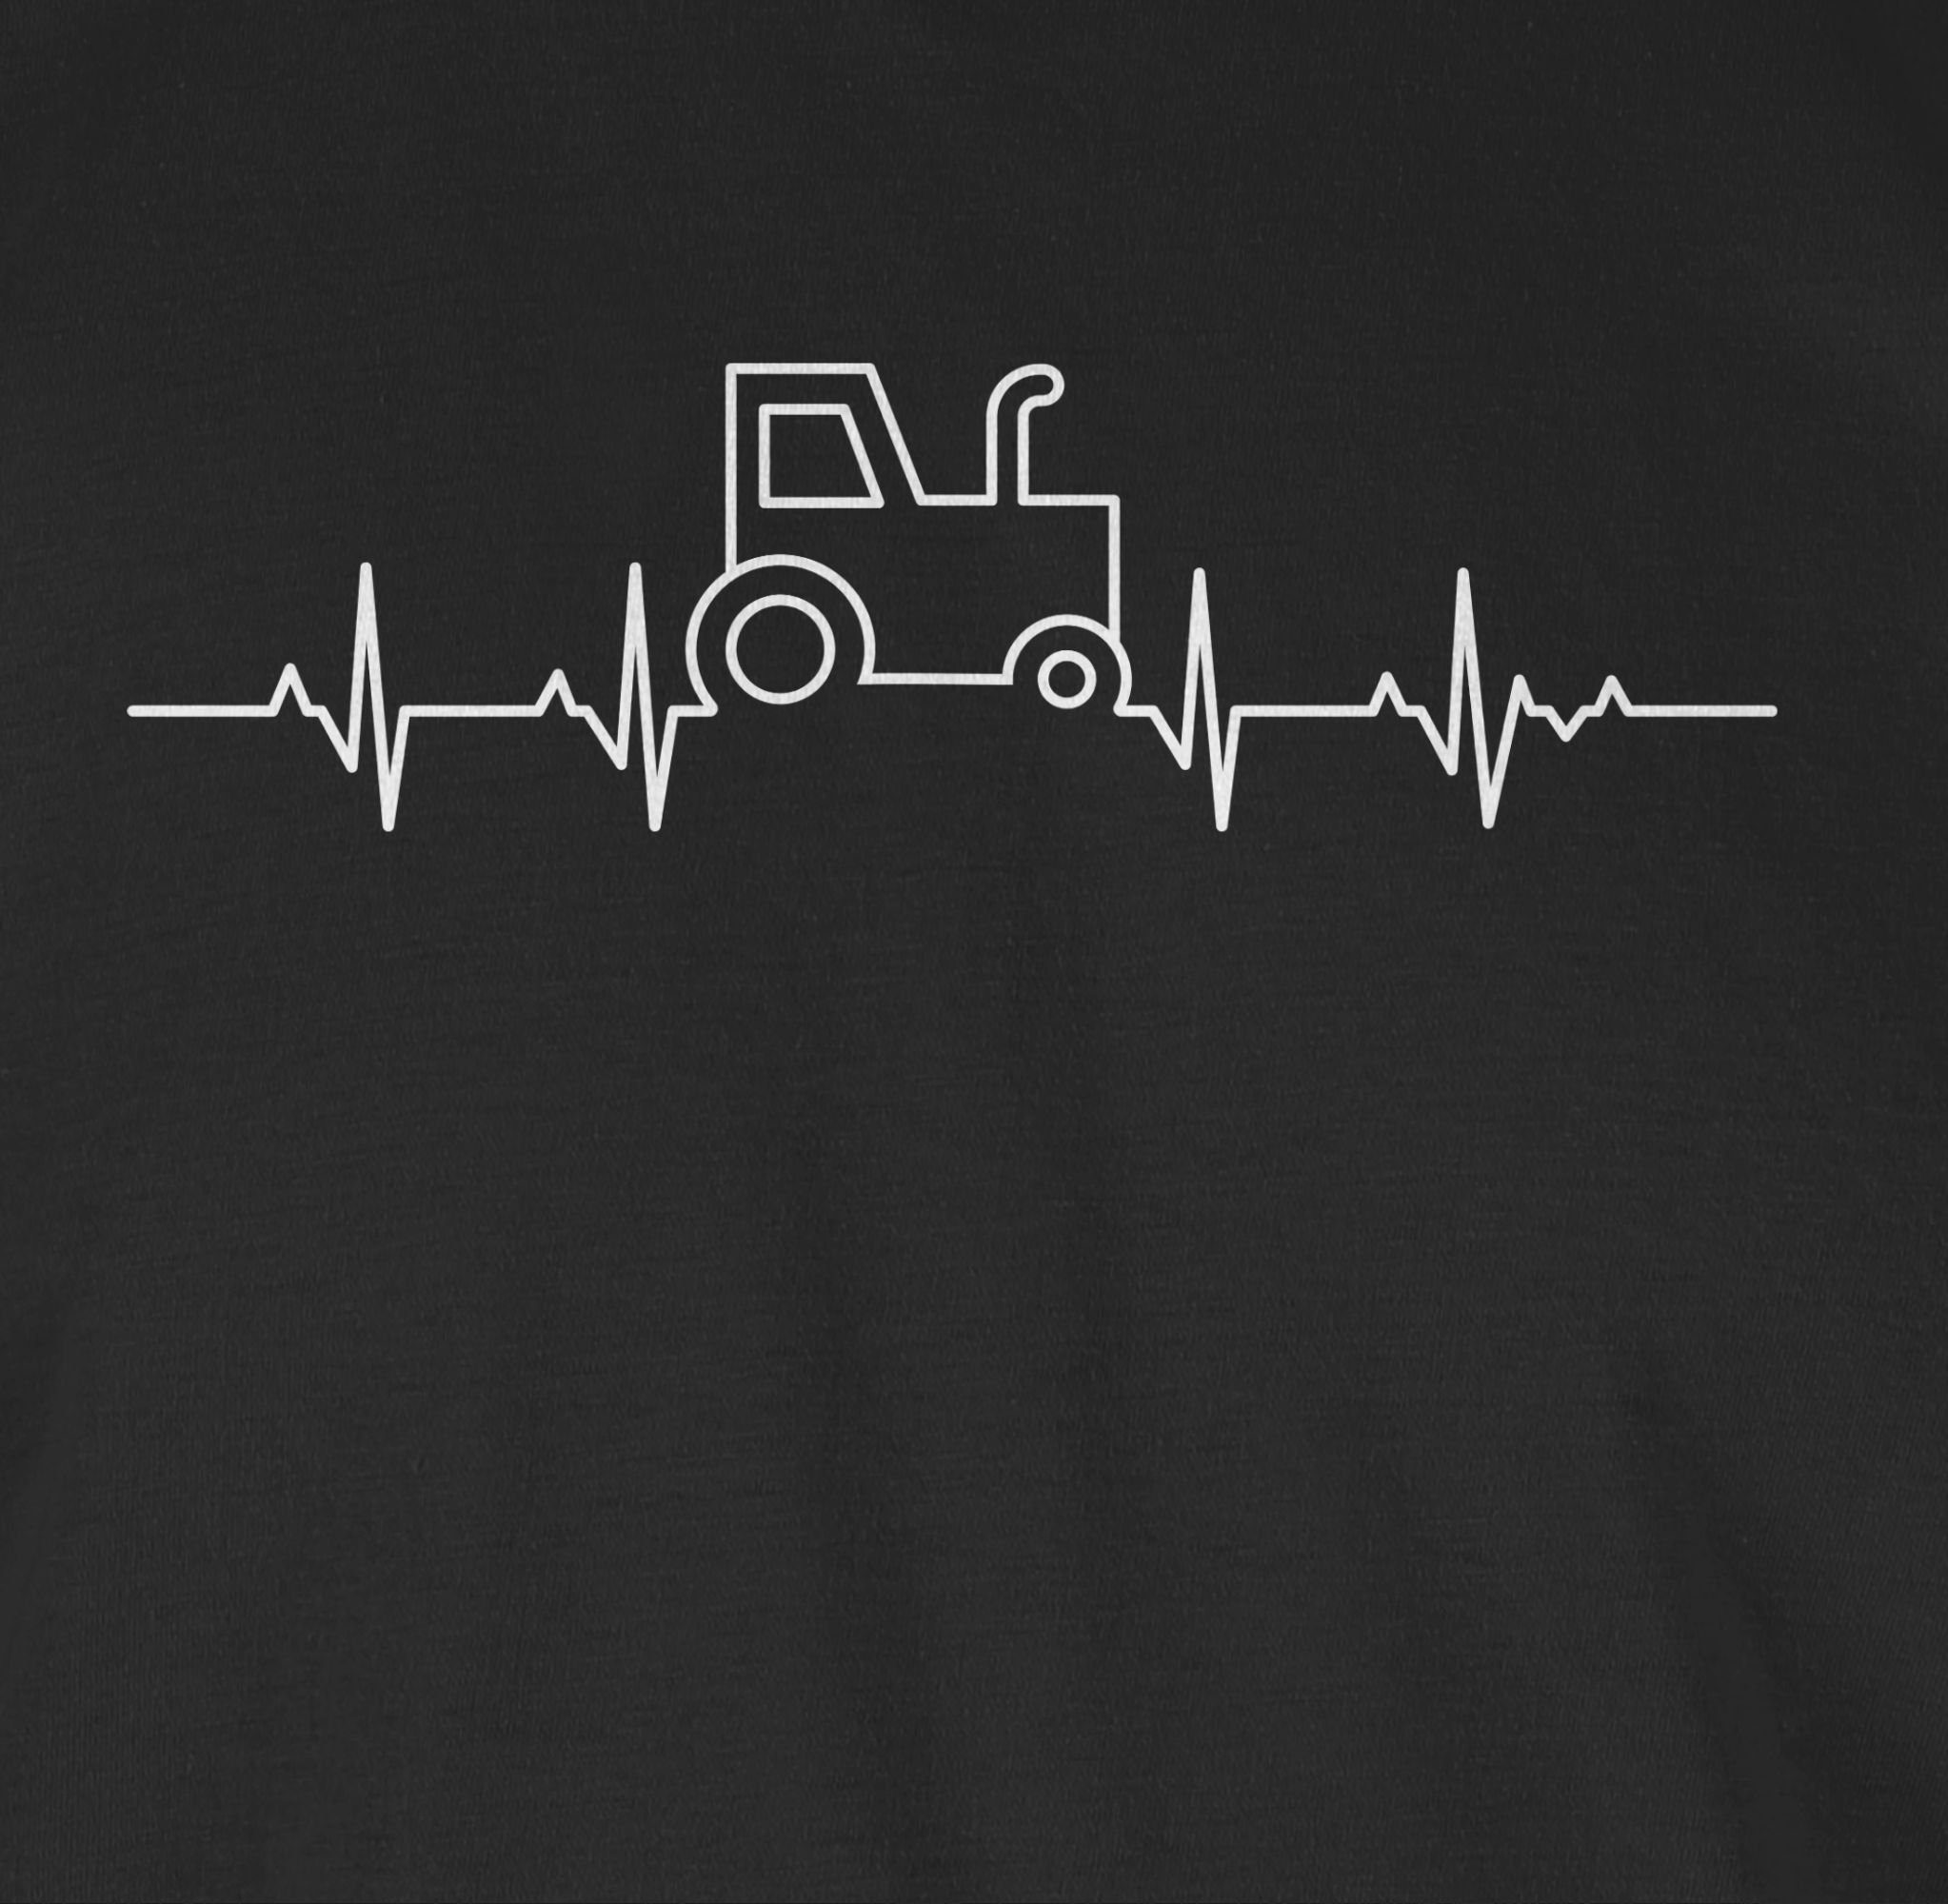 Schwarz 01 Shirtracer Traktor Traktor Herzschlag T-Shirt